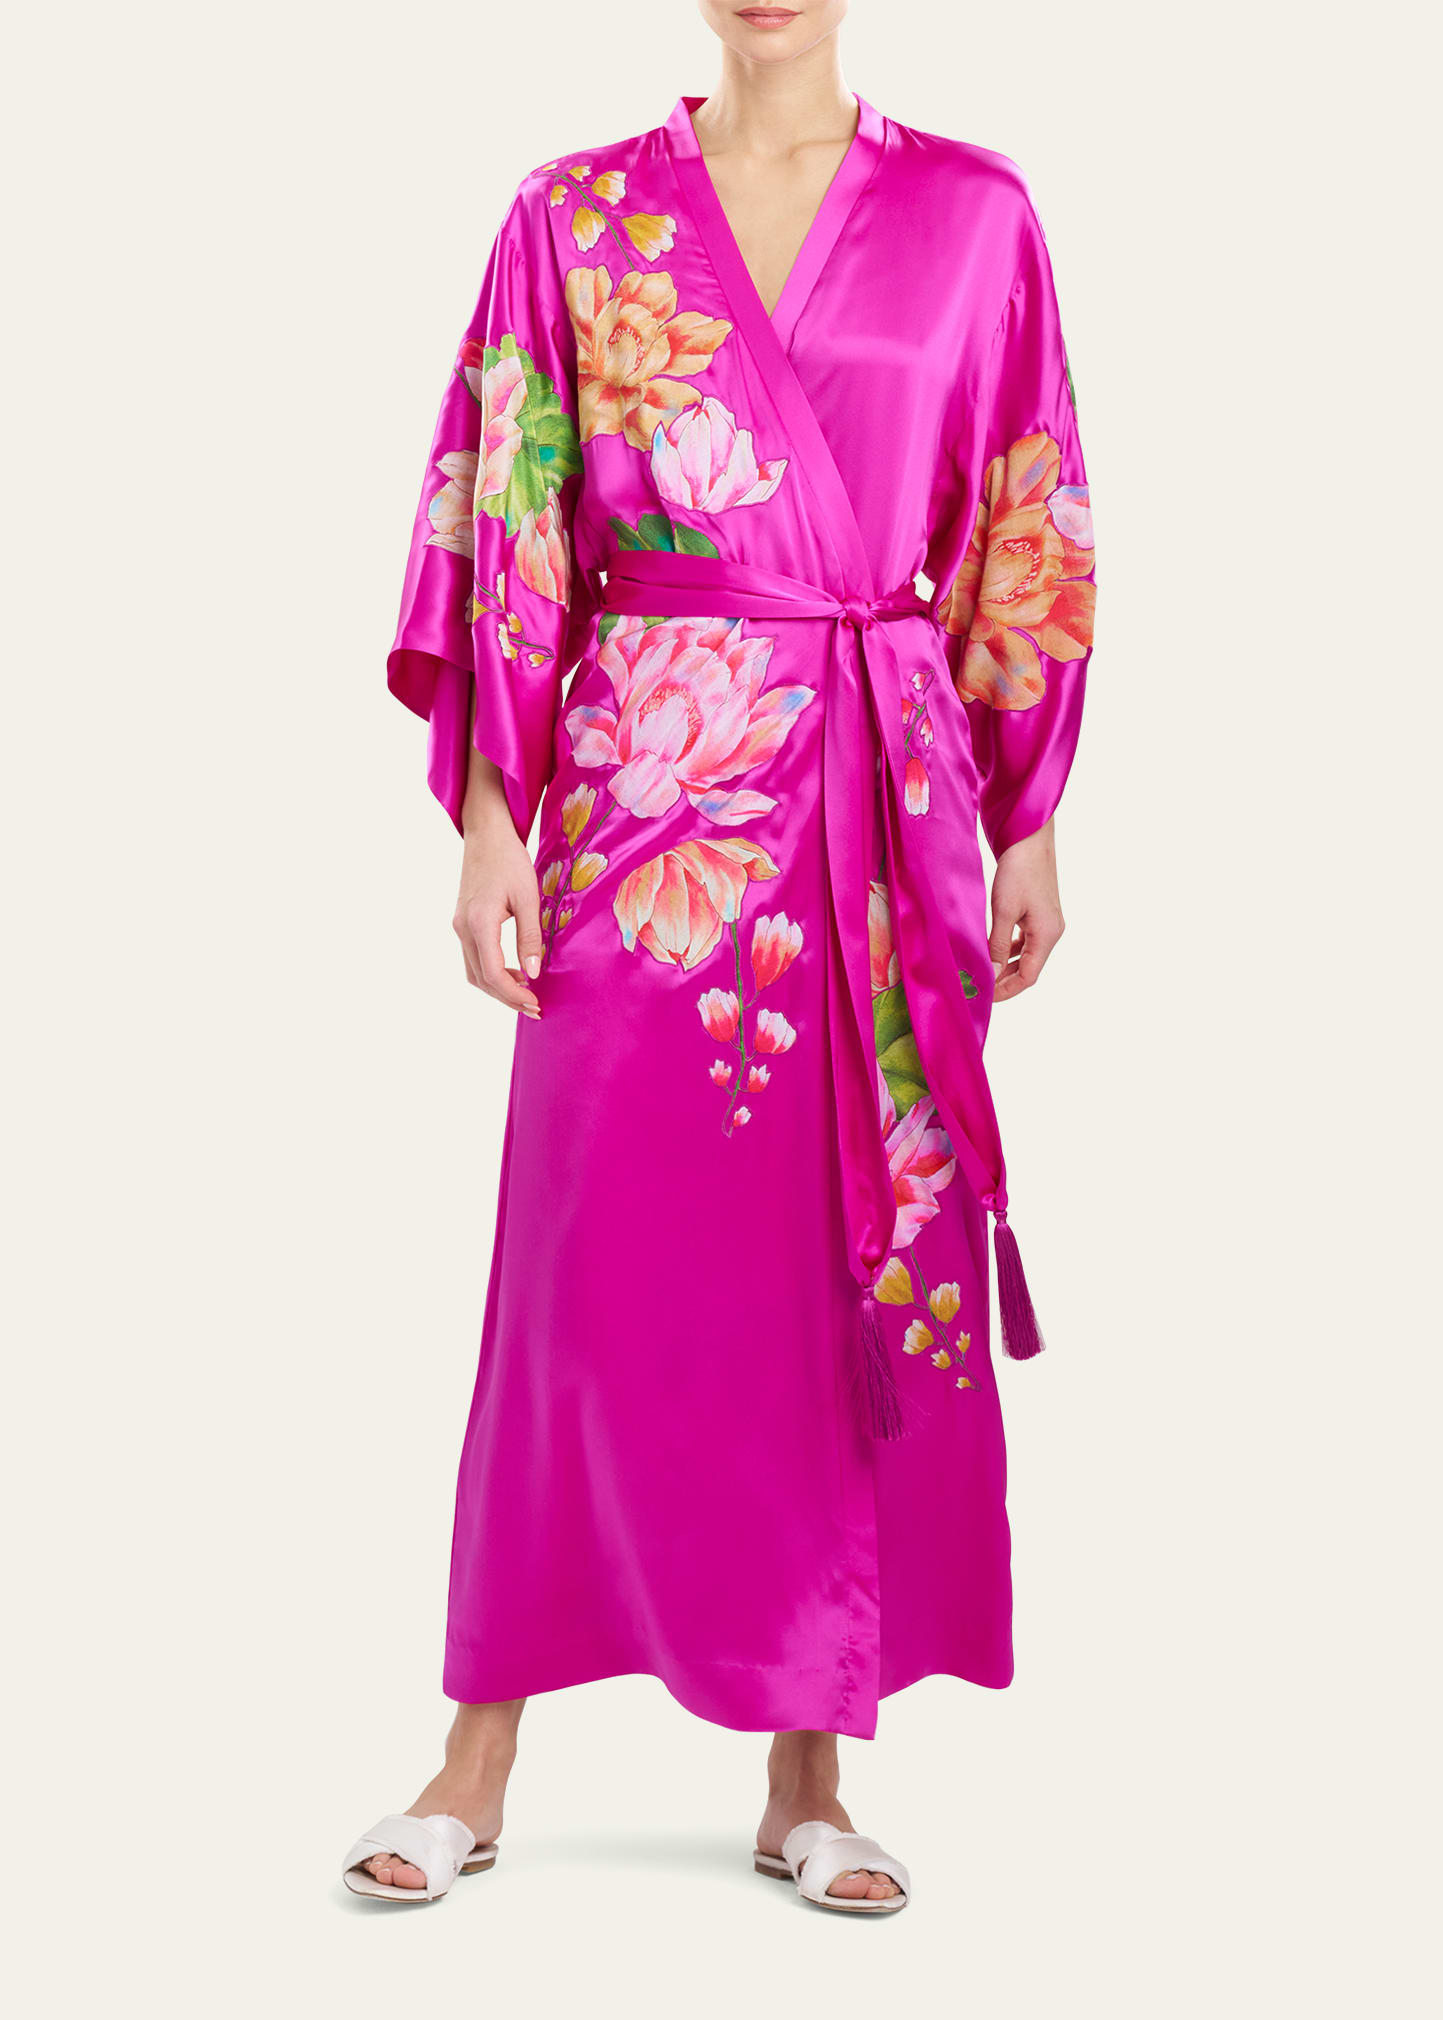 Hanabi Couture Floral Applique Charmeuse Robe